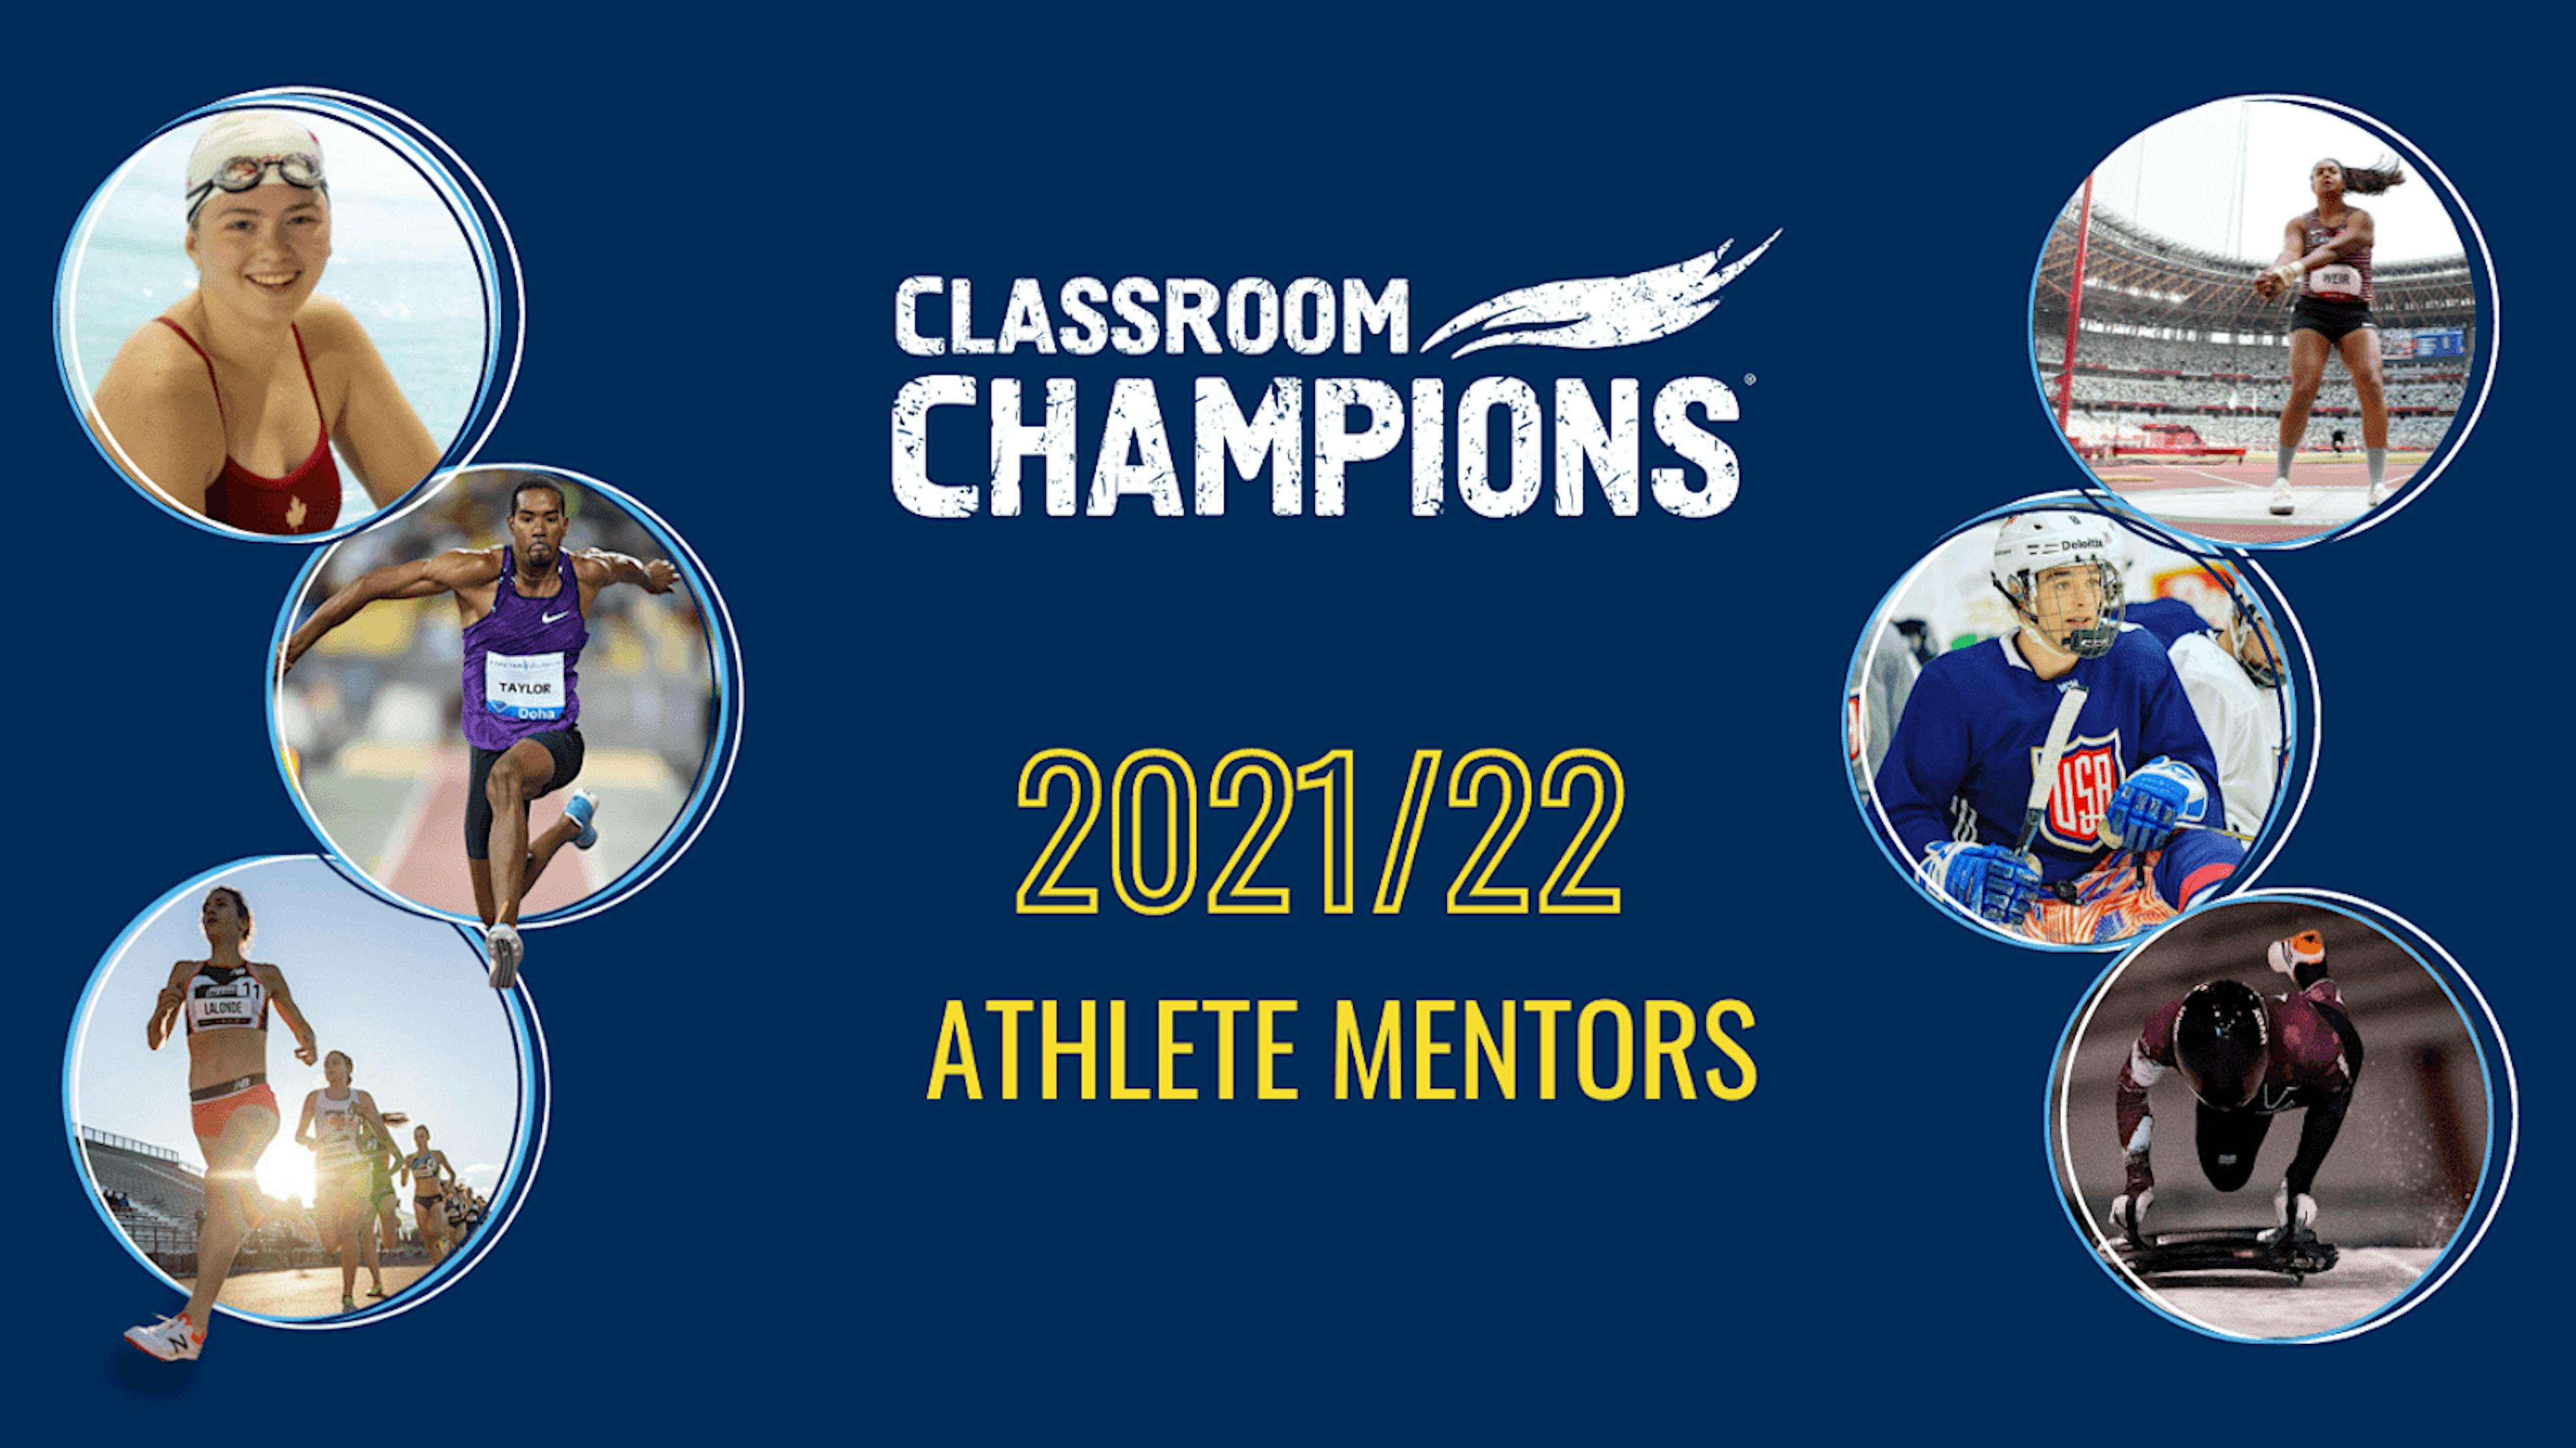 Six athlete photos alongside the text 'Classroom Champions 2021/22 Athlete Mentors'